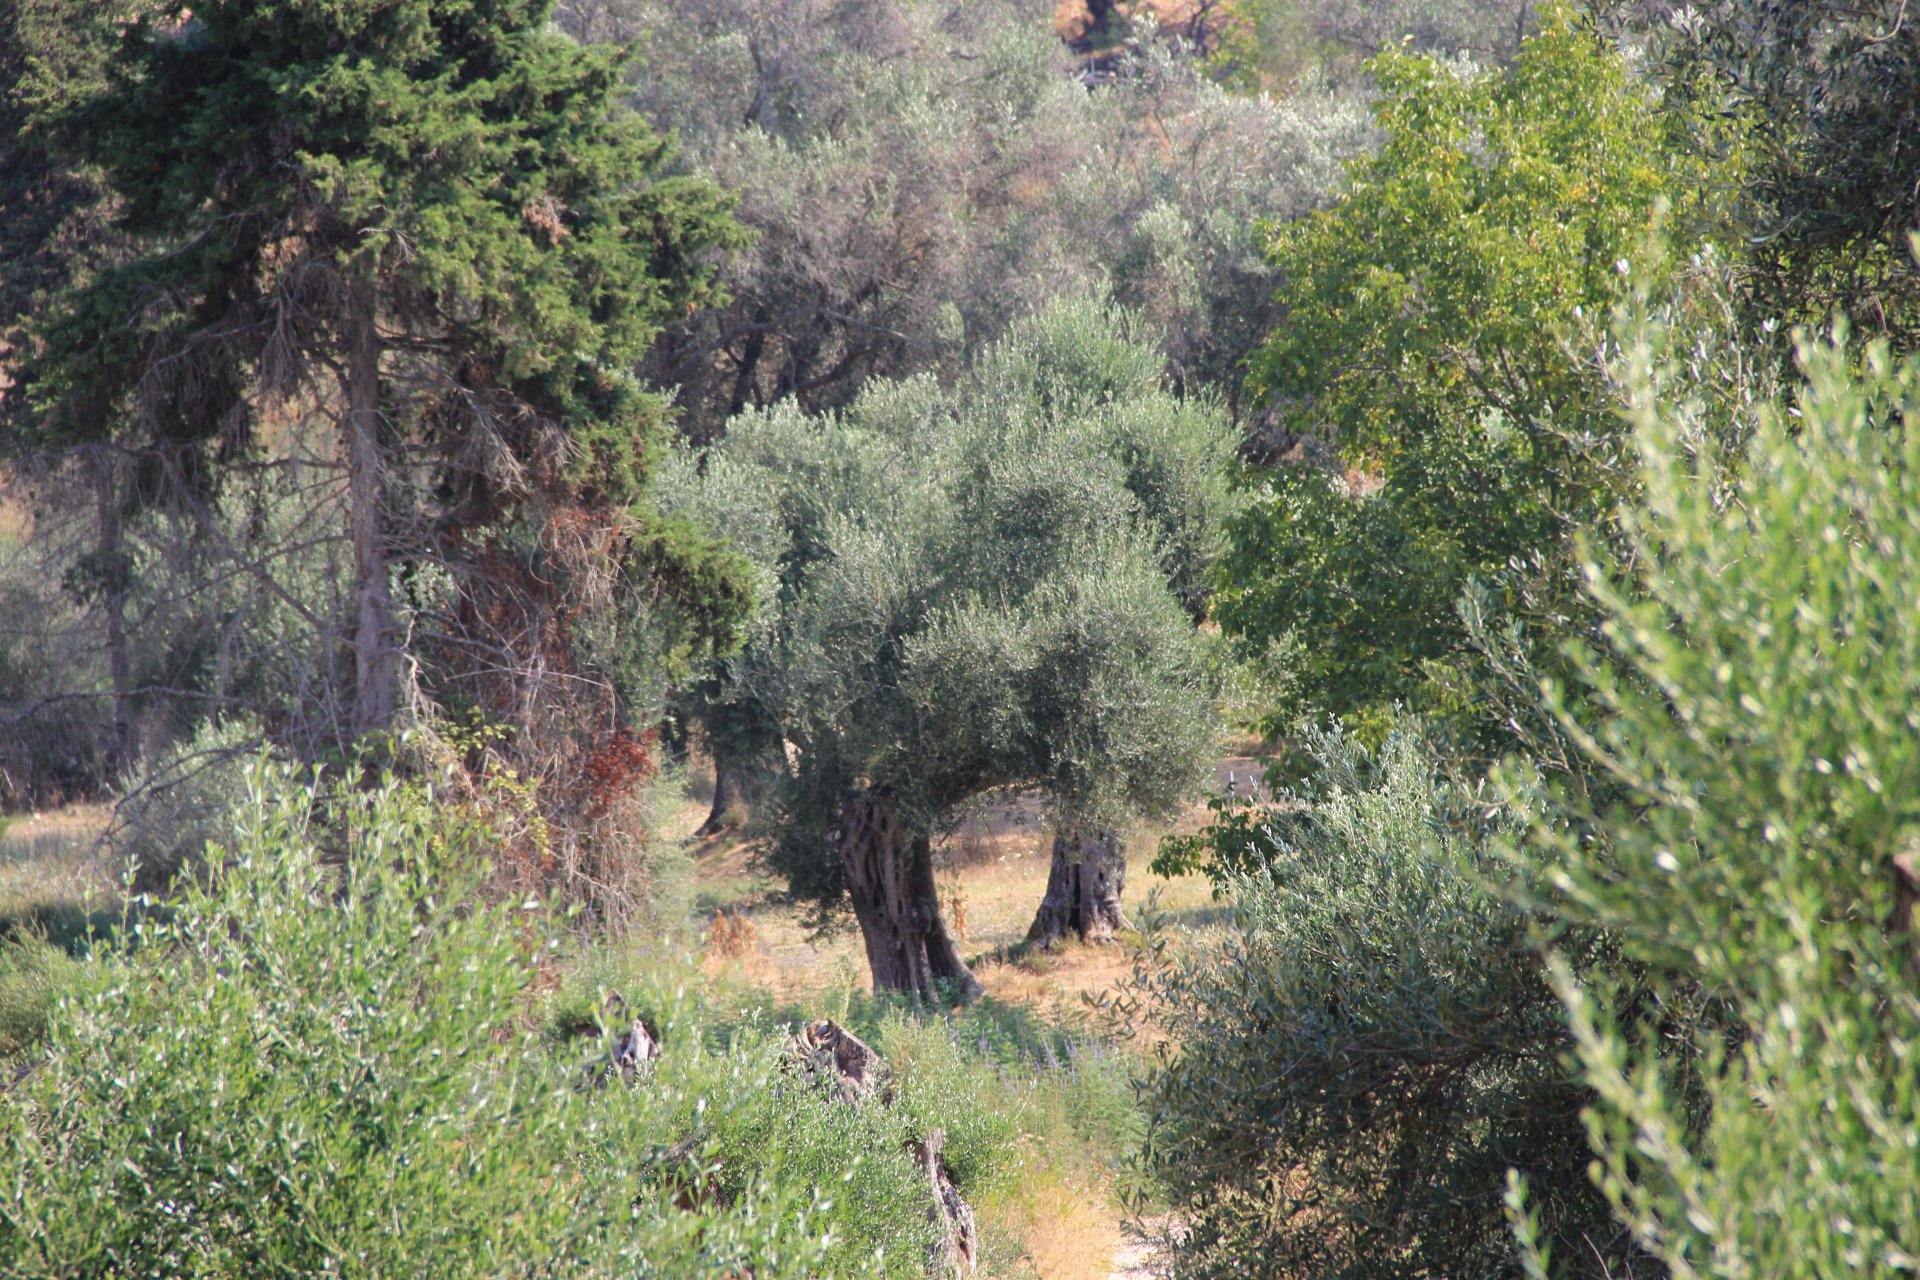 Gaj oliwny